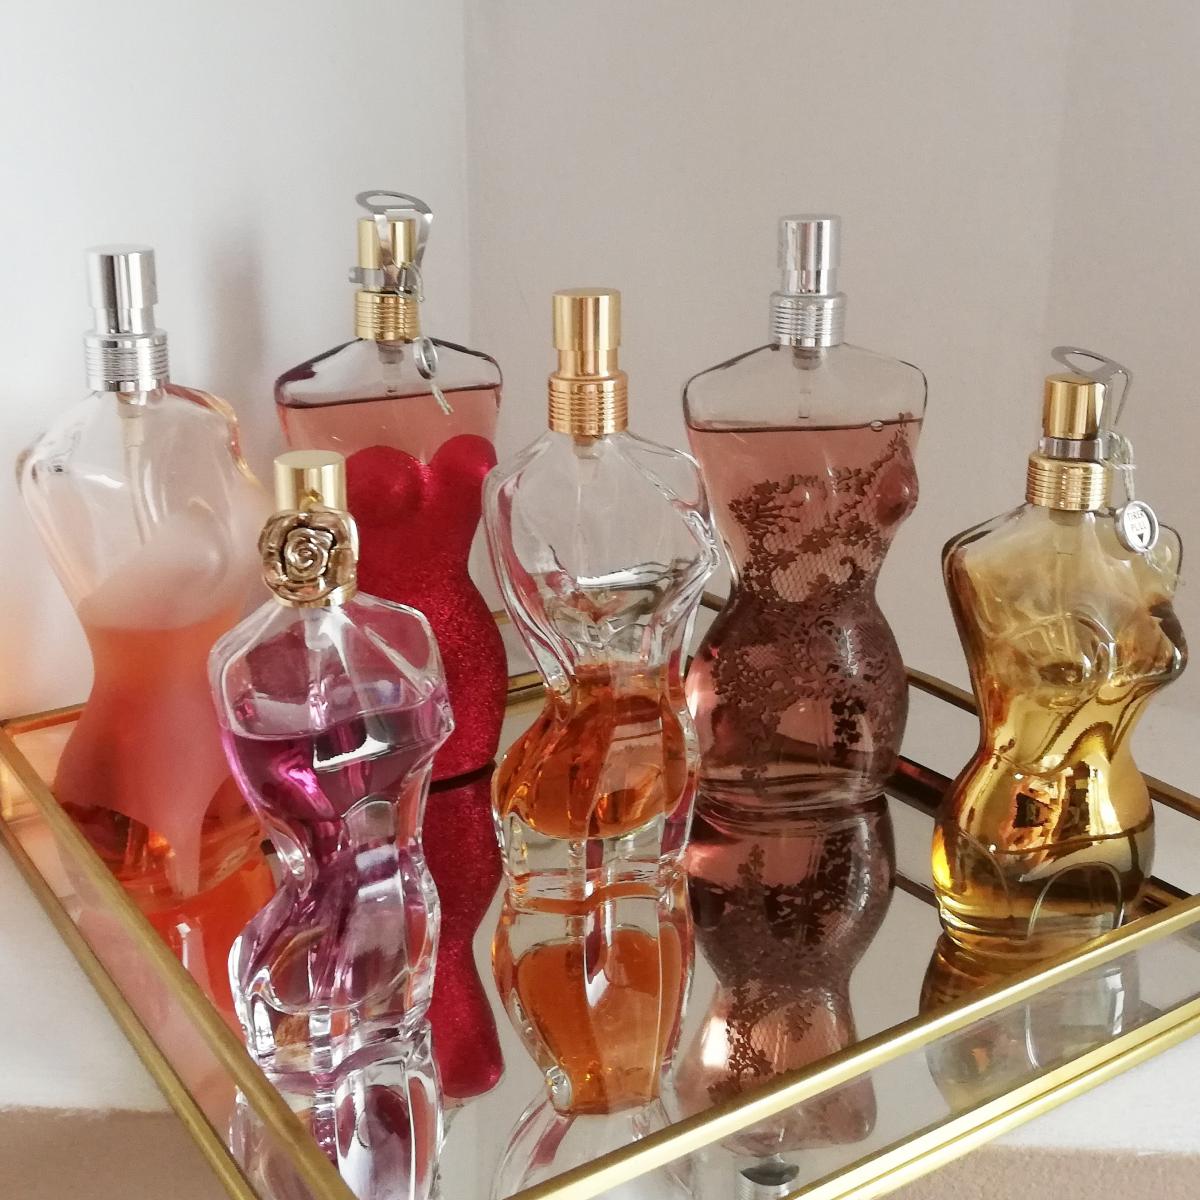 Classique Intense Jean Paul Gaultier аромат — аромат для женщин 2014